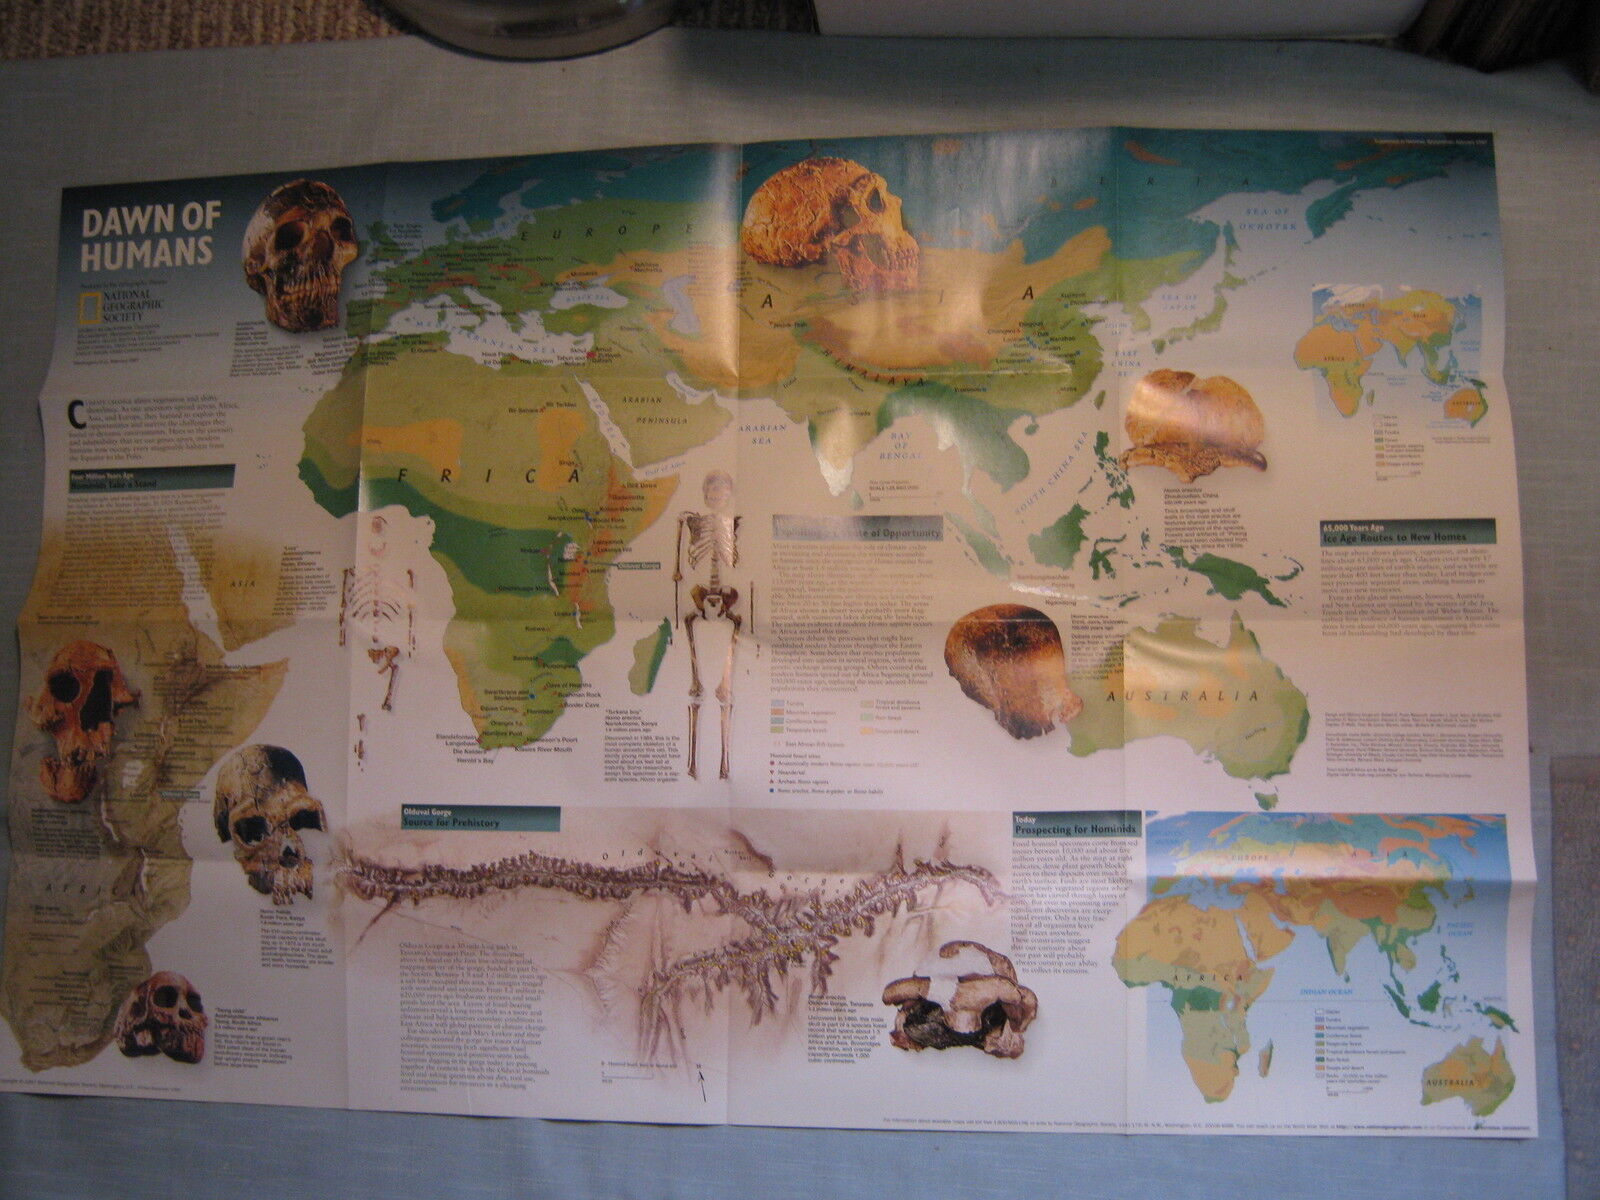 DAWN OF HUMANS + SEEKING OUR ORIGINS EVOLUTION MAP National Geographic Feb. 1997